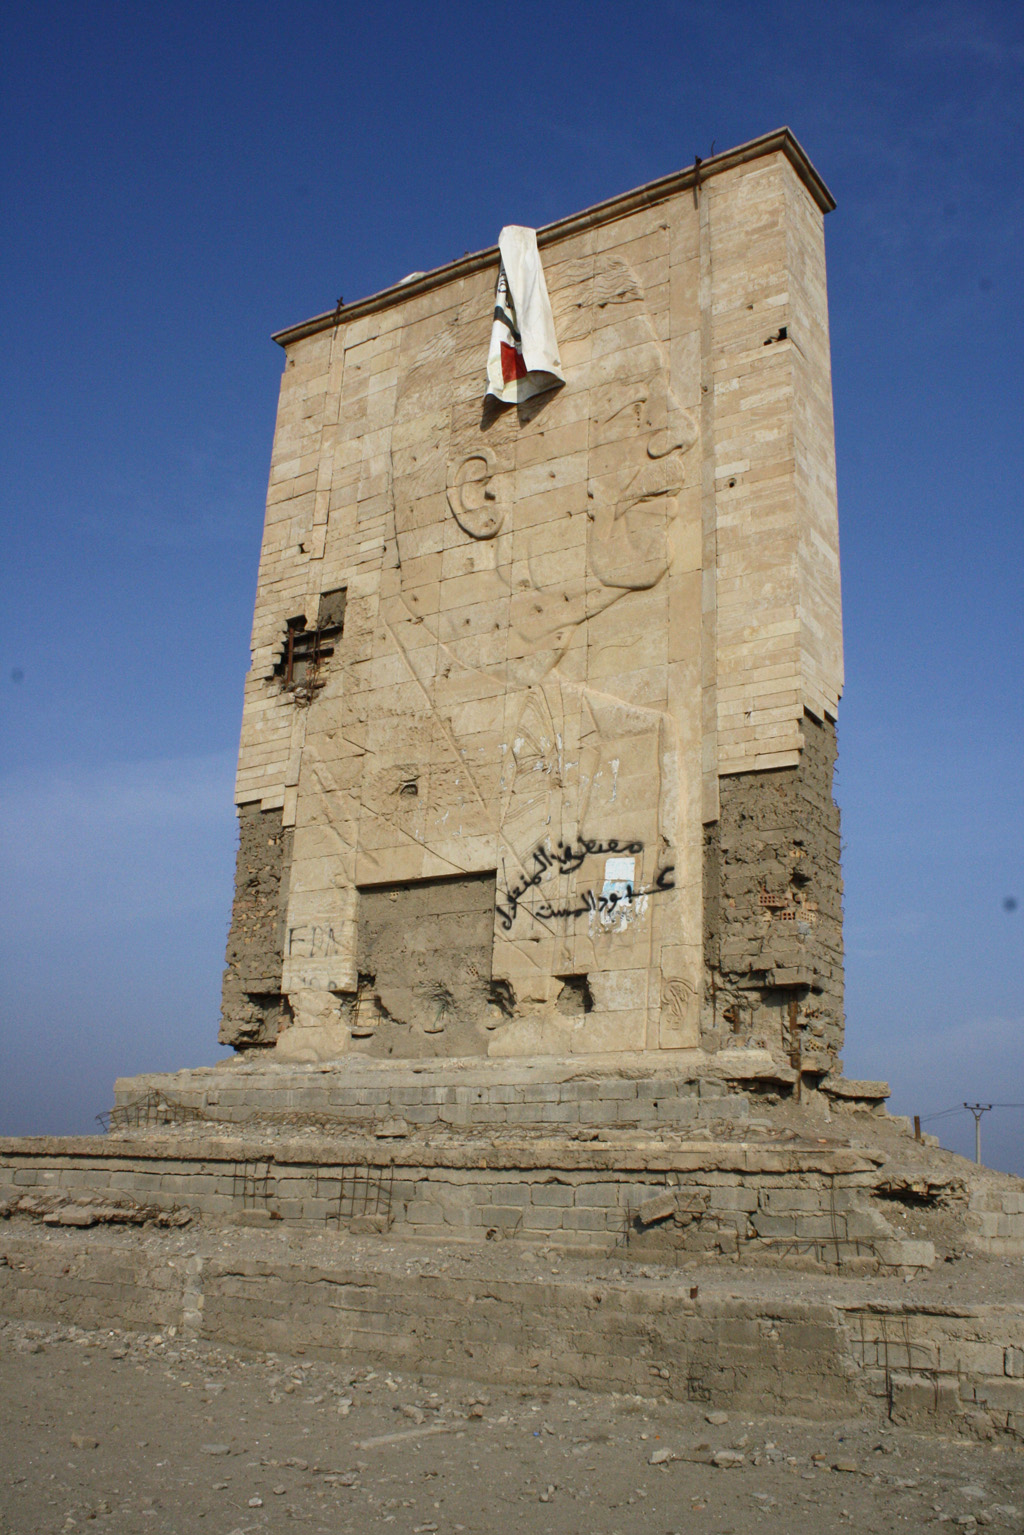 Stone portrait of Saddam Hussein at Babylon